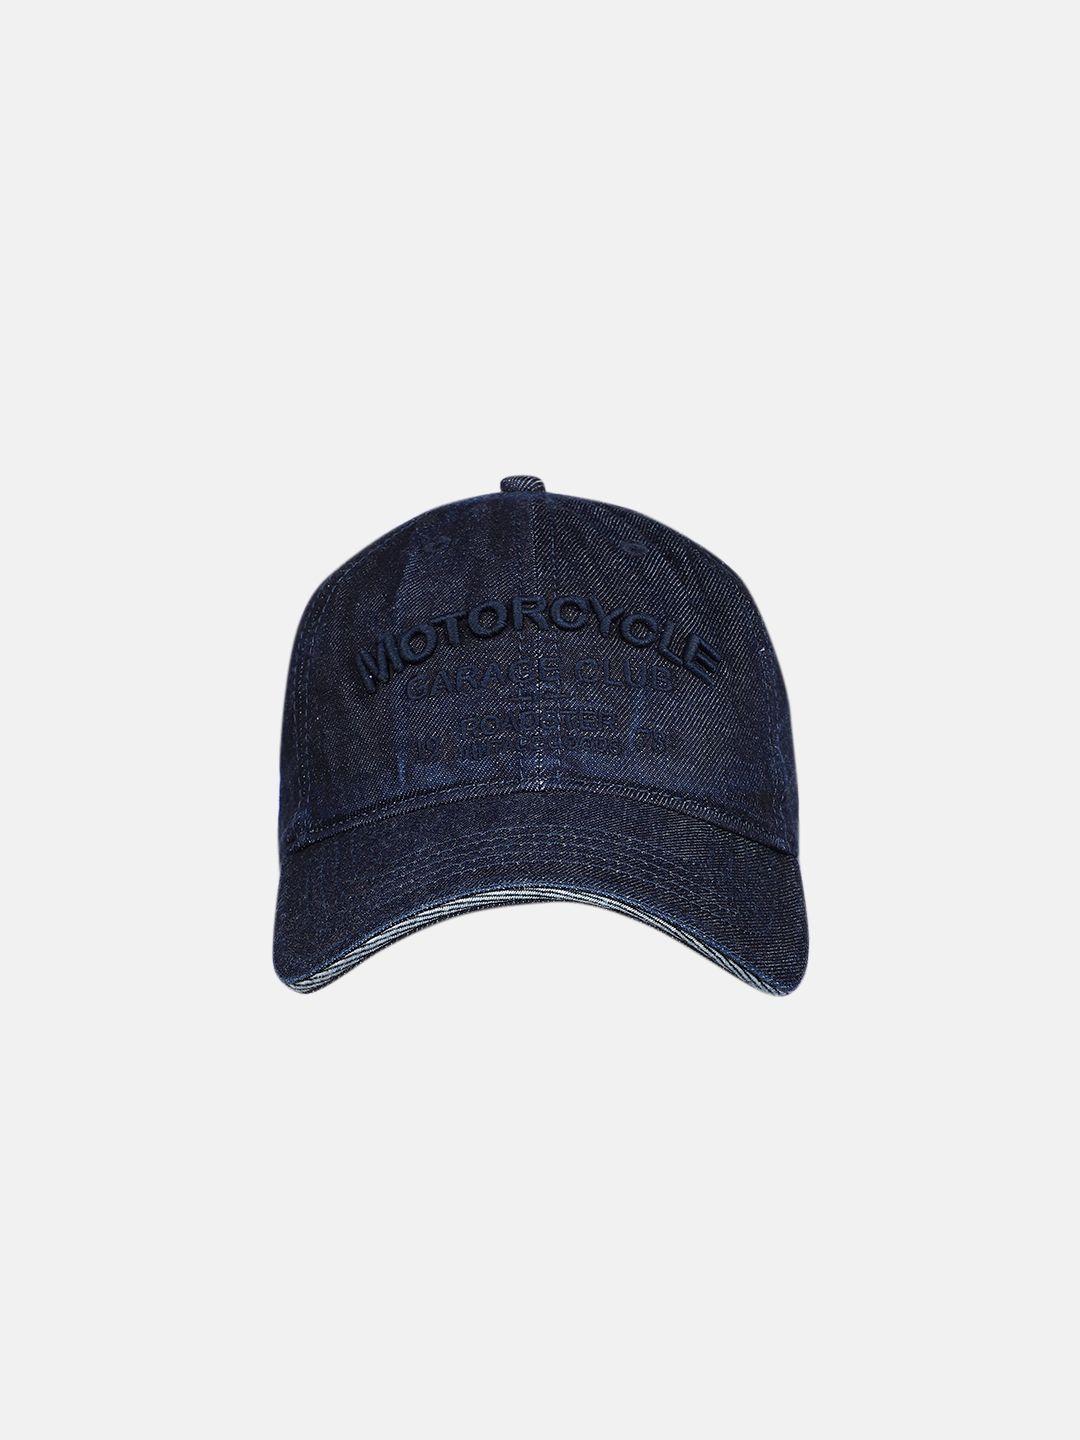 roadster unisex navy blue embroidered baseball cap